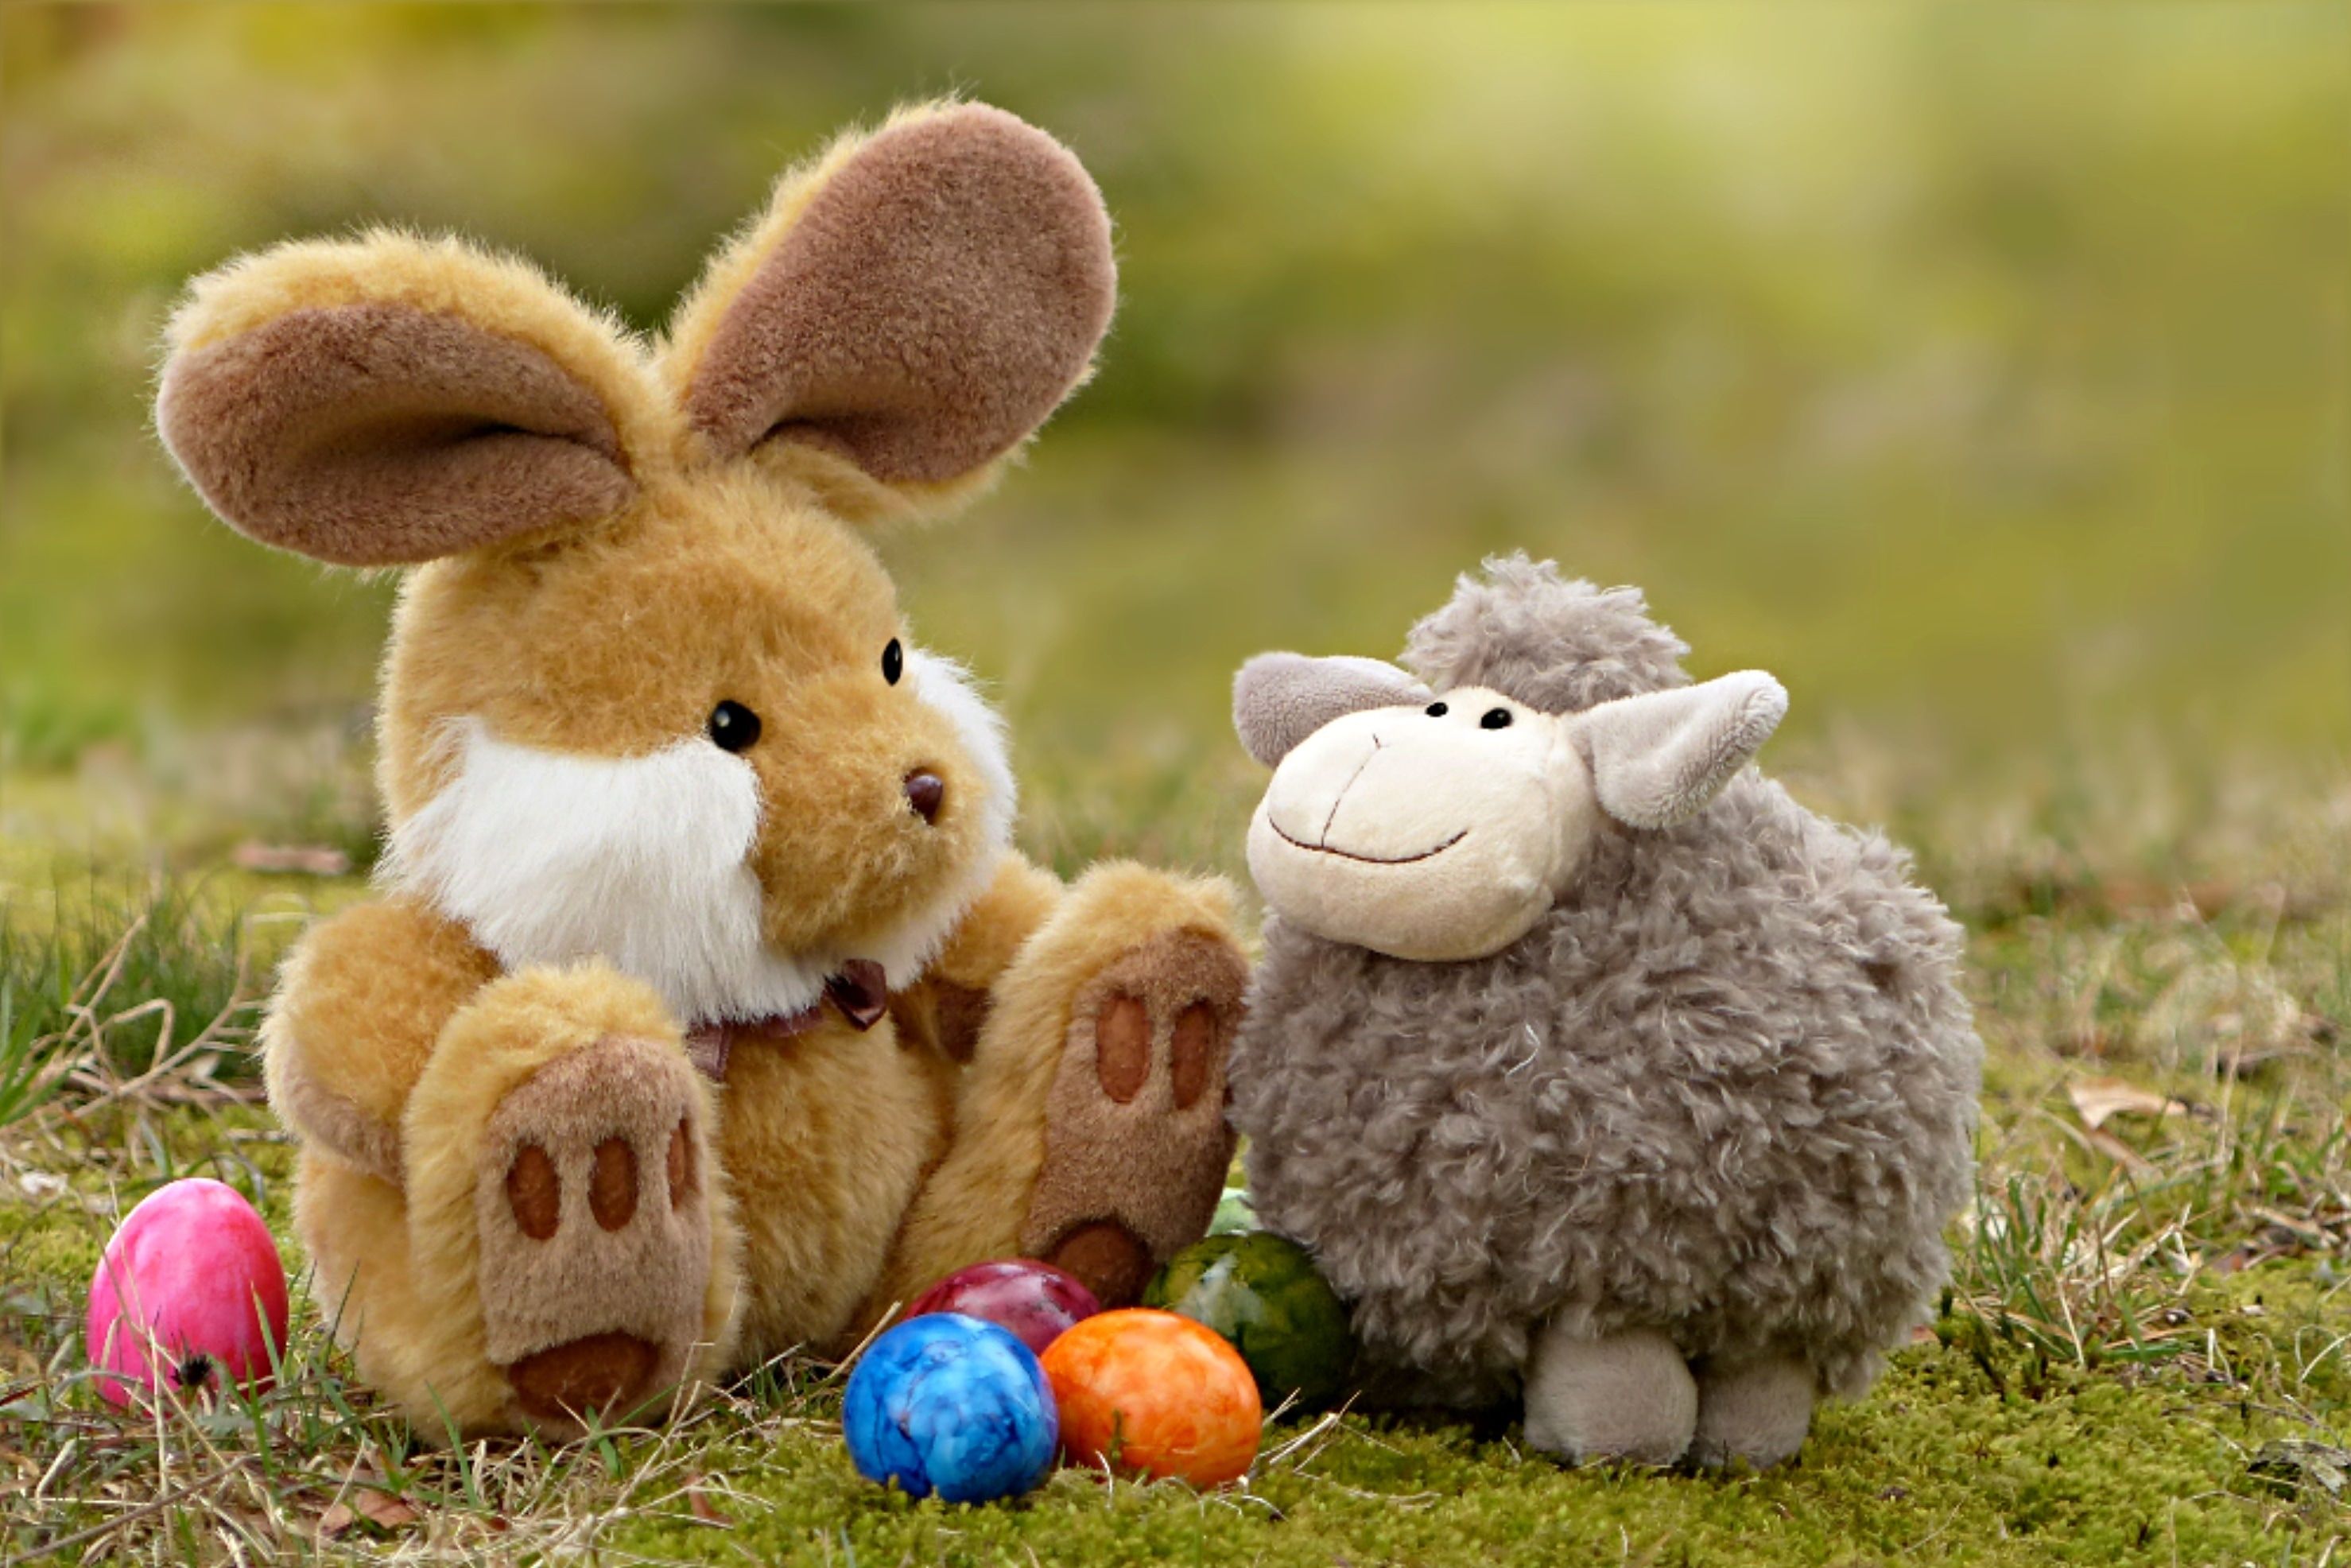 rabbit and sheep plush toy free image